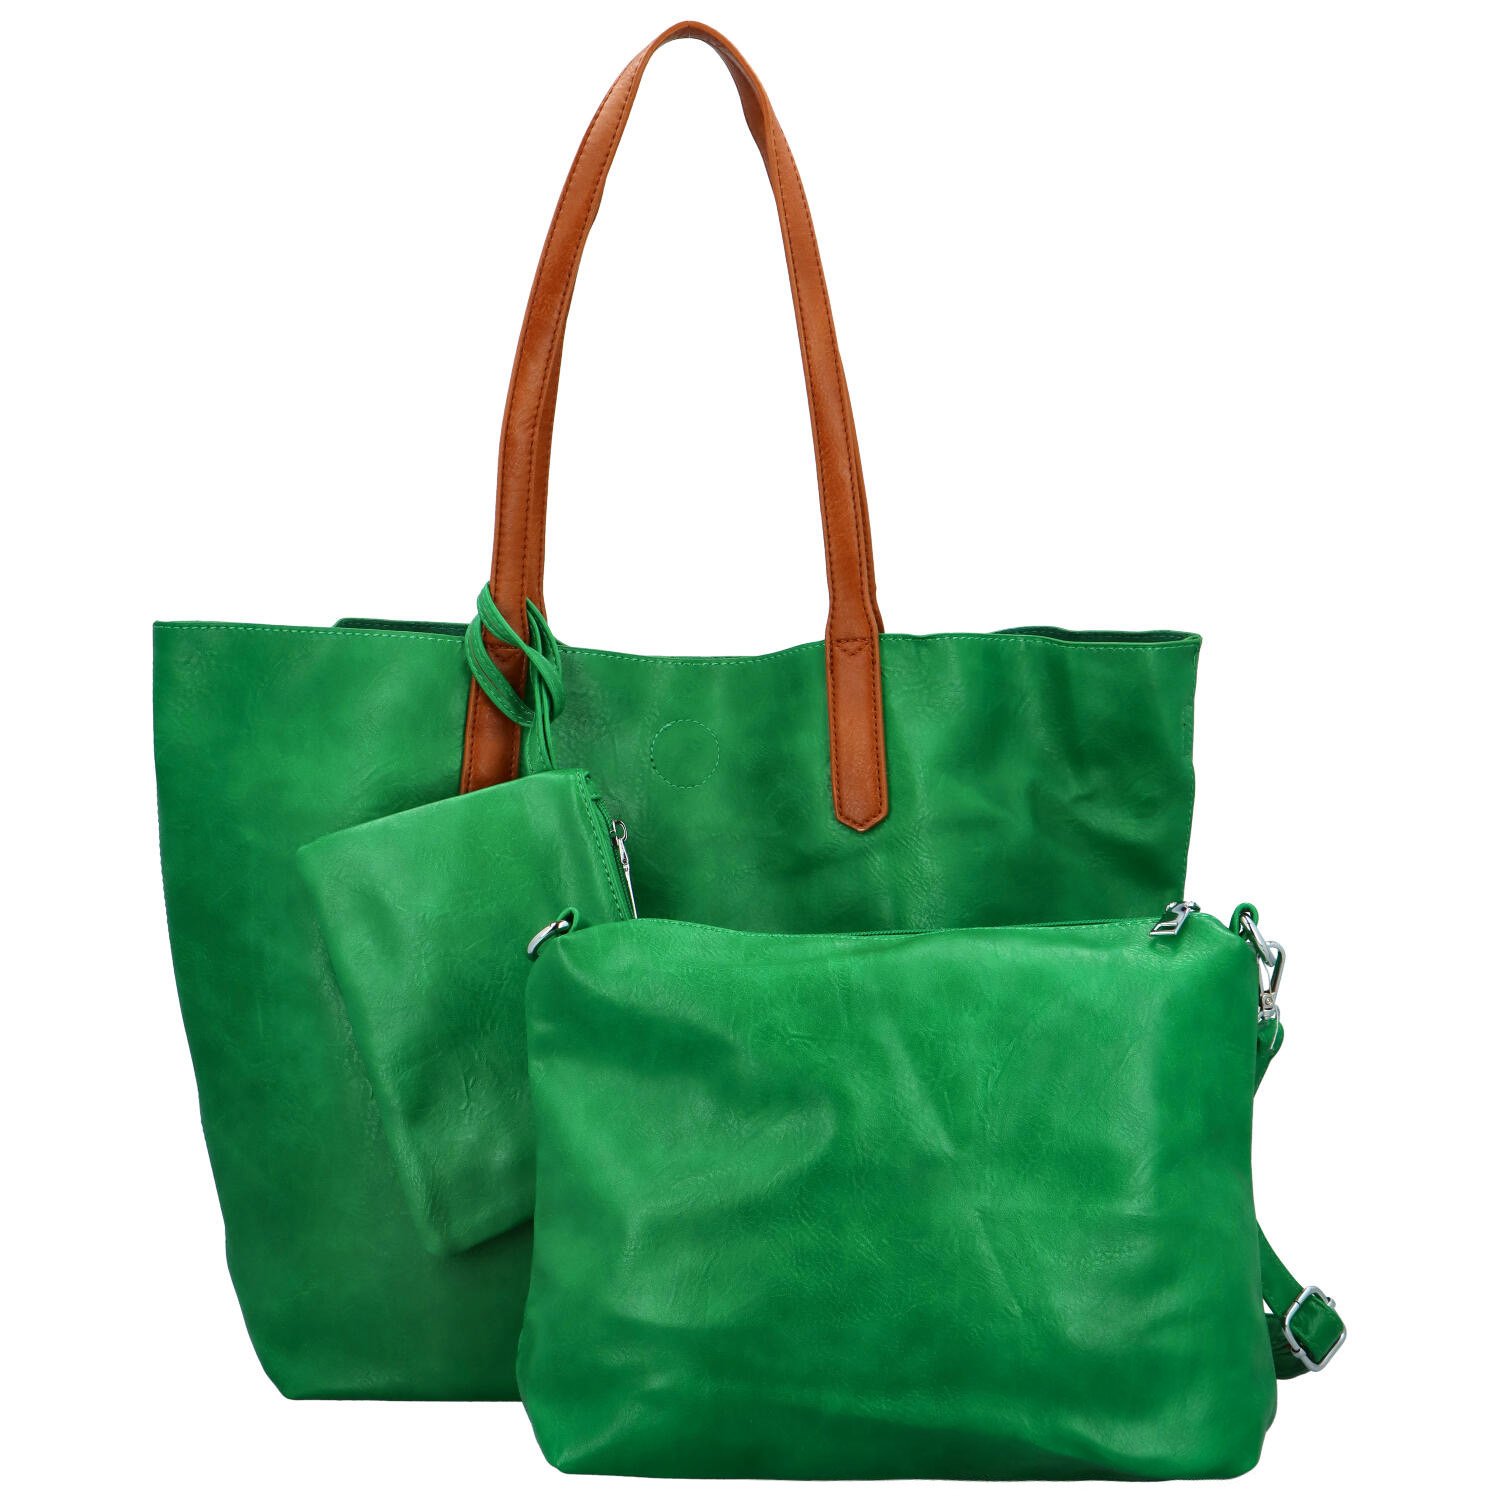 Trendy dámská koženková kabelka 2v1 na rameno Ignáta, zelená